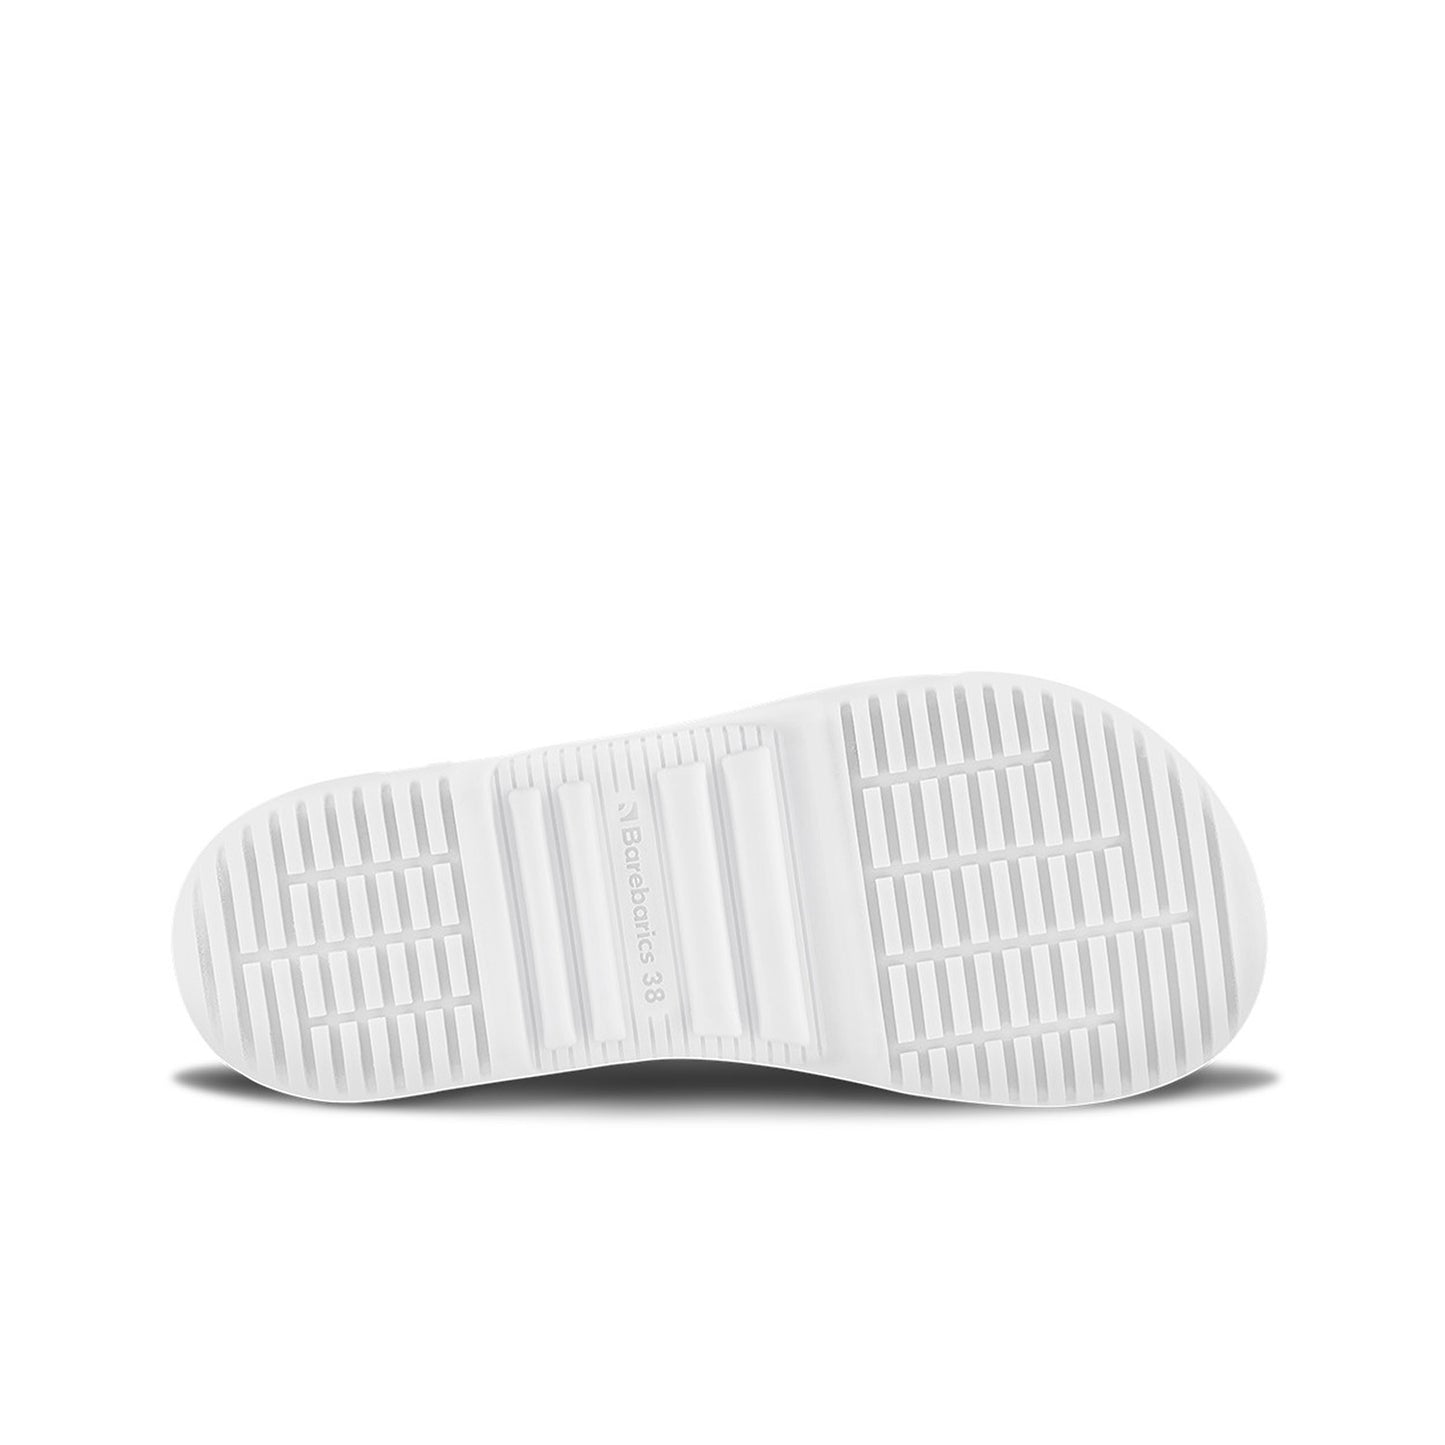 Barebarics Zing Barefoot Sneakers - Black & White (Leather)